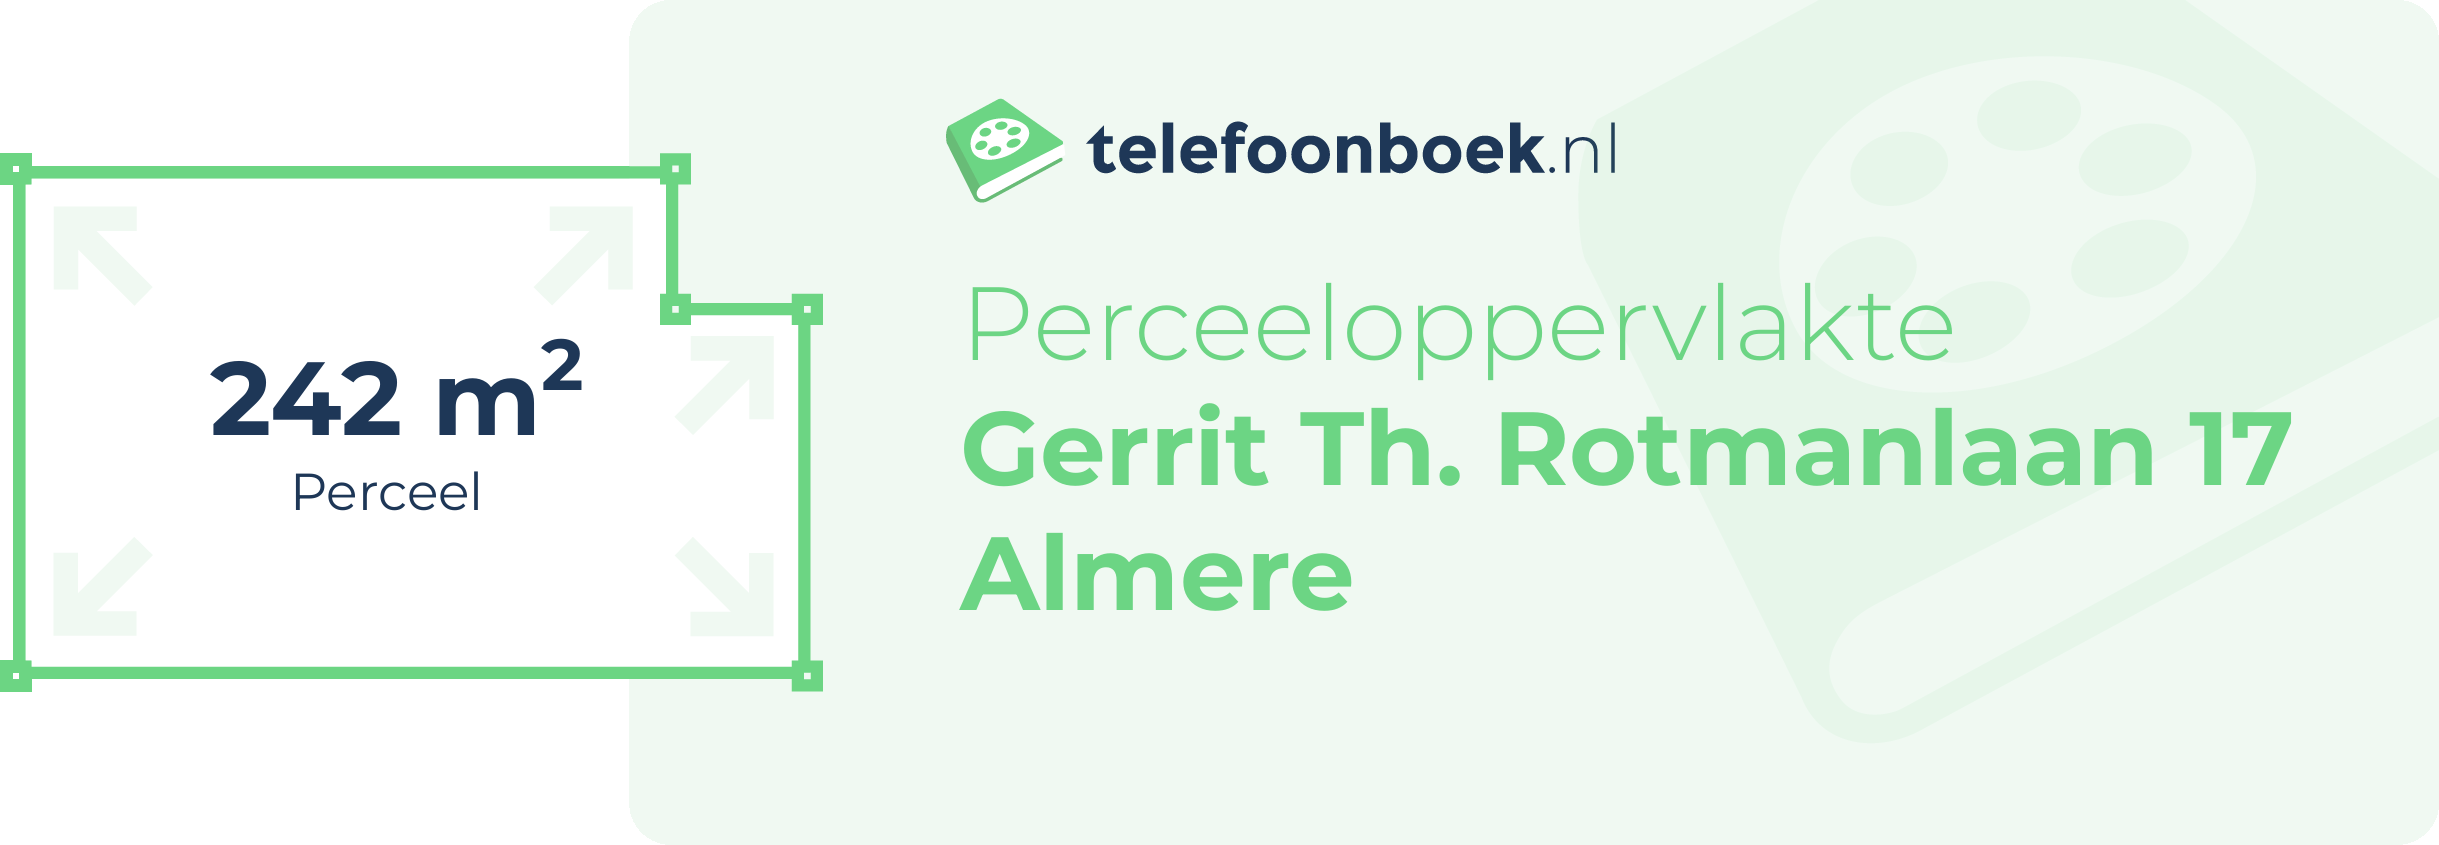 Perceeloppervlakte Gerrit Th. Rotmanlaan 17 Almere